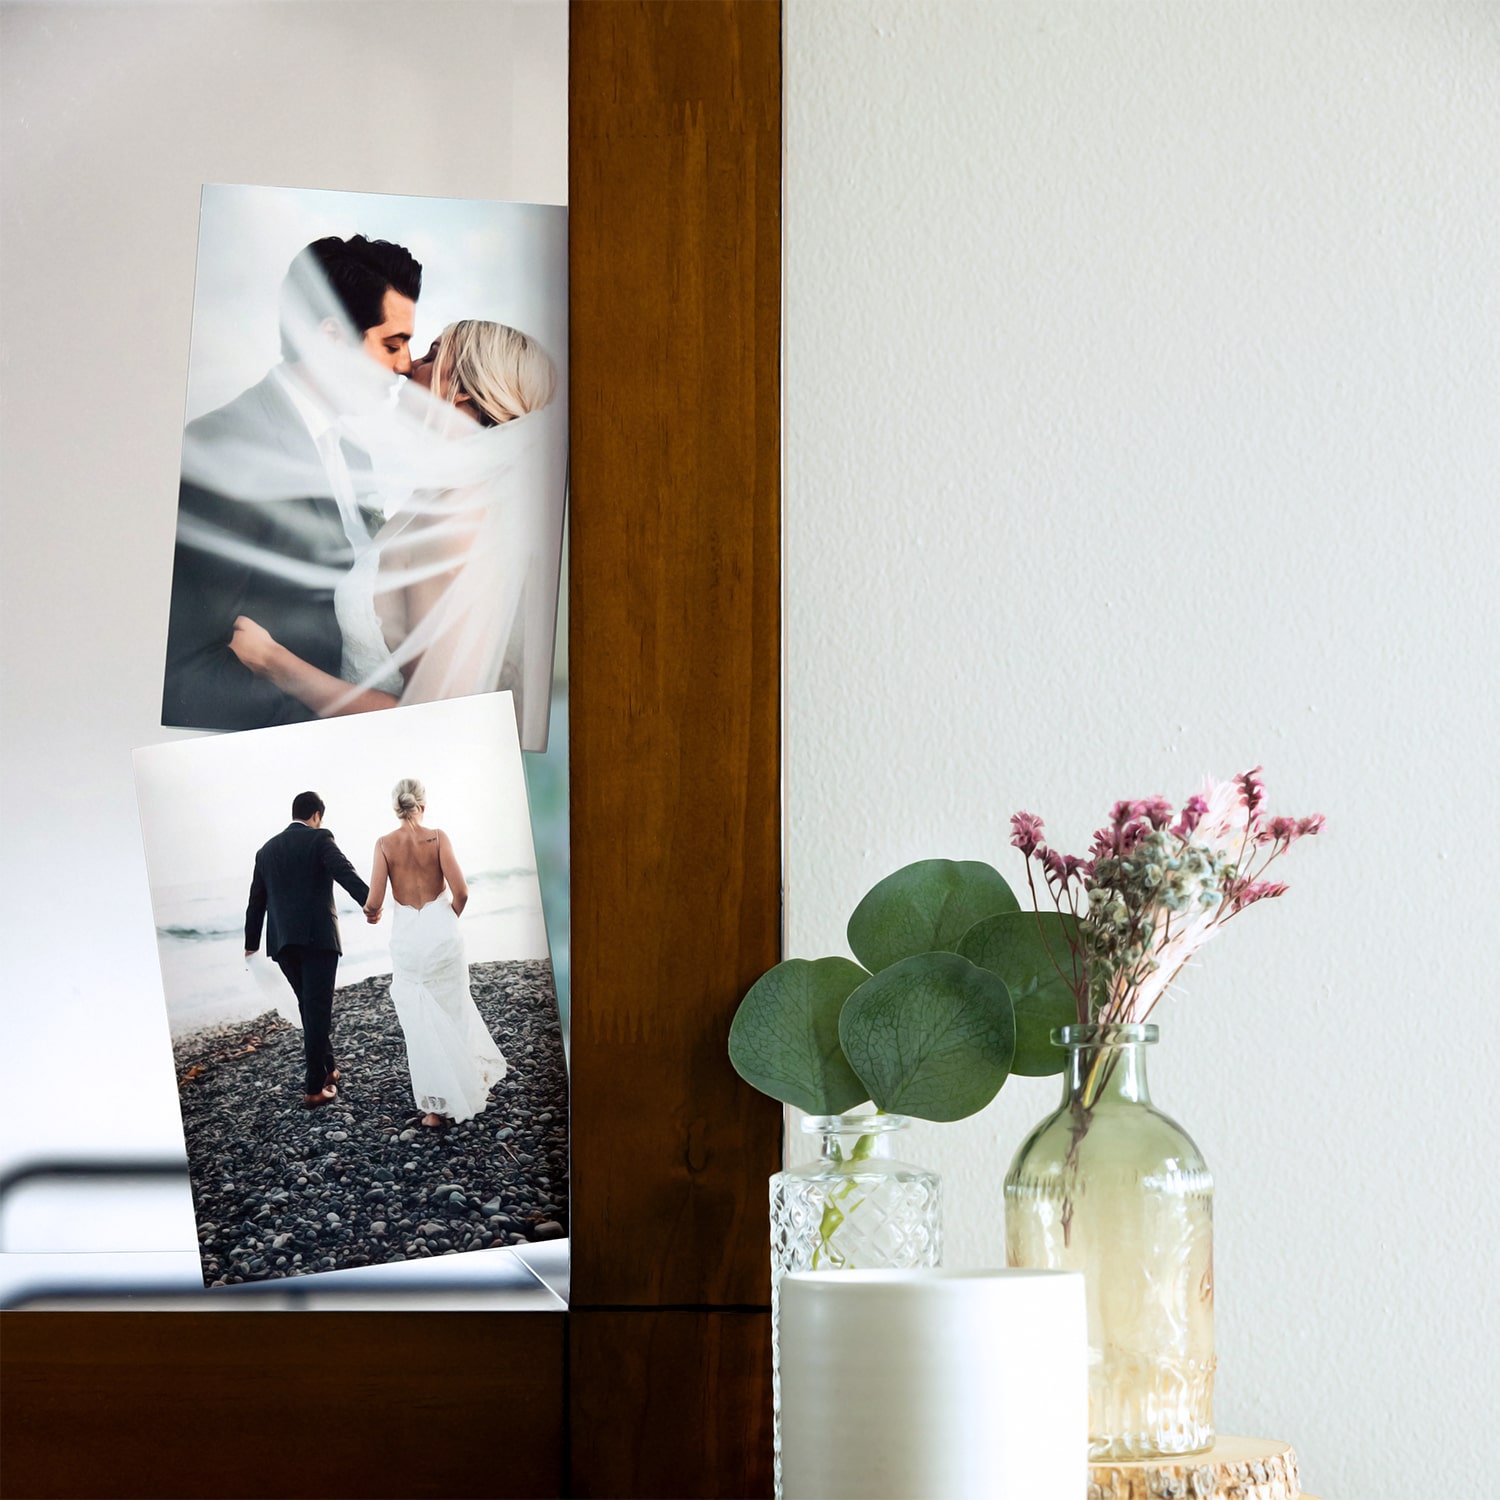 photo prints on dresser of couples wedding photos